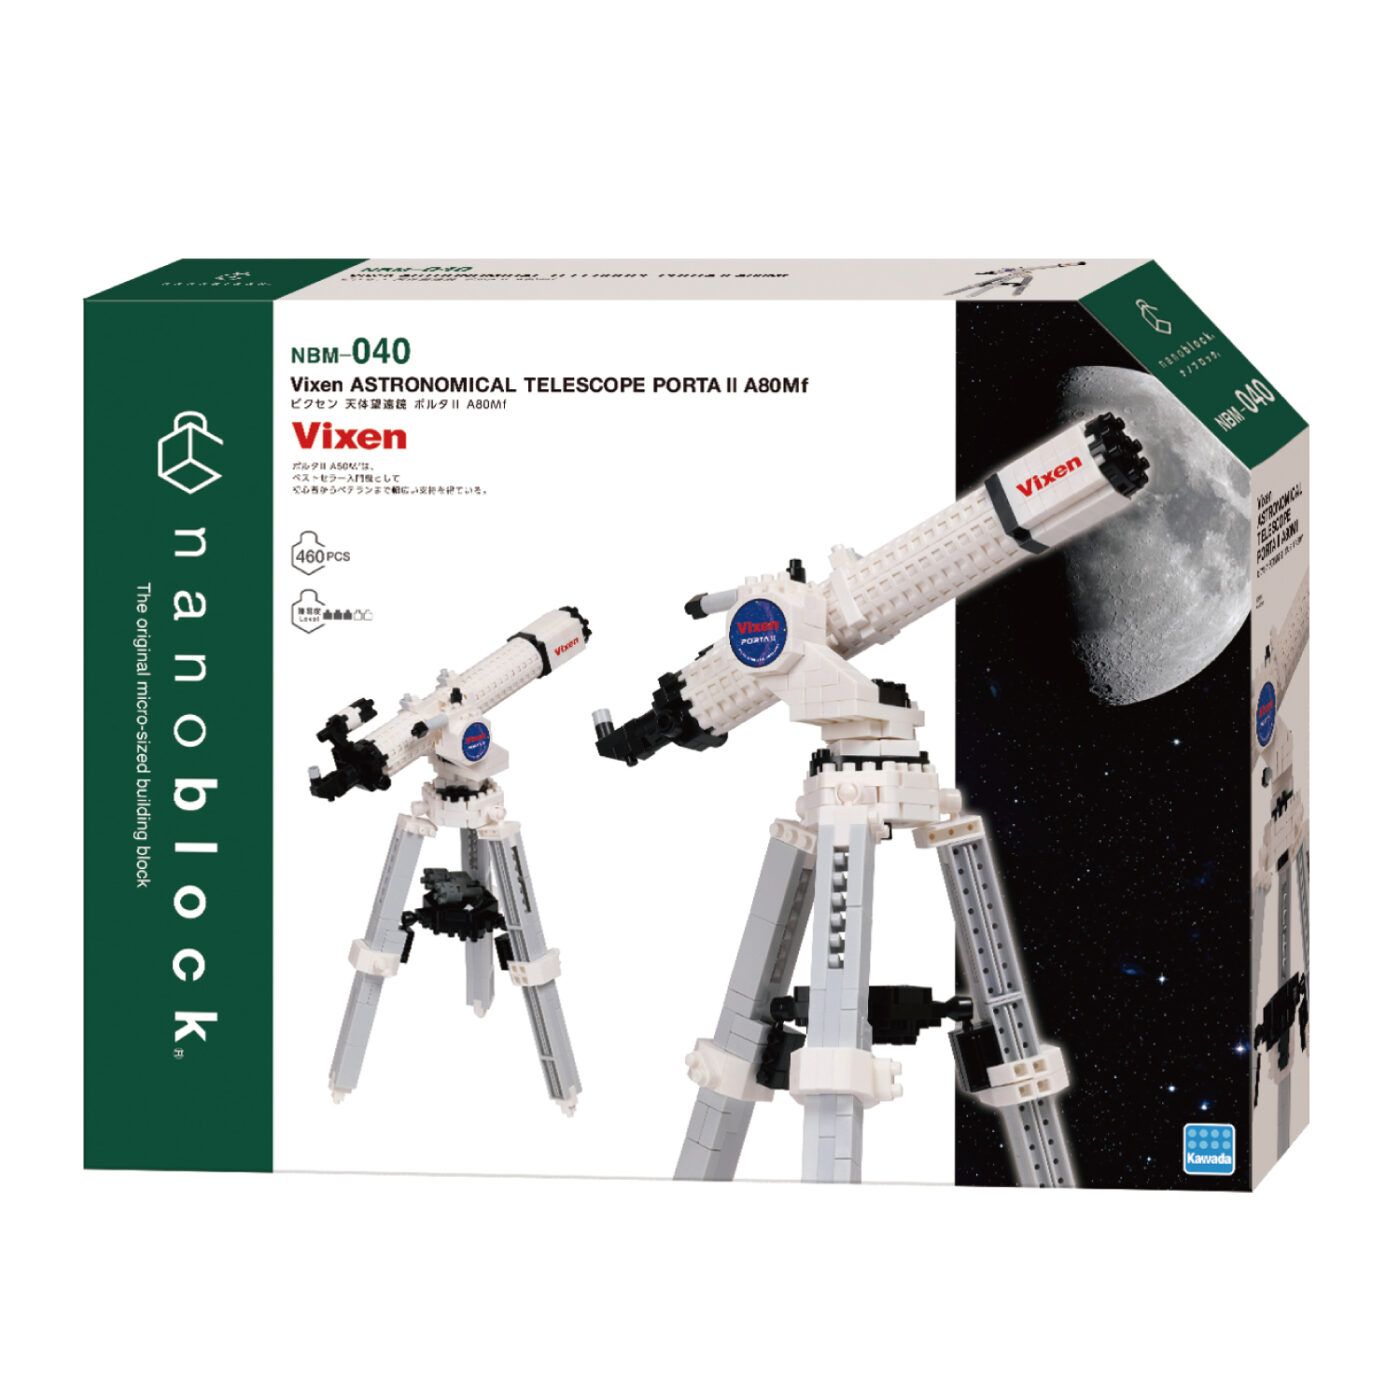 Vixen ASTRONOMICAL TELESCOPE PORTA Ⅱ A80Mf | CATALOG | nanoblock 